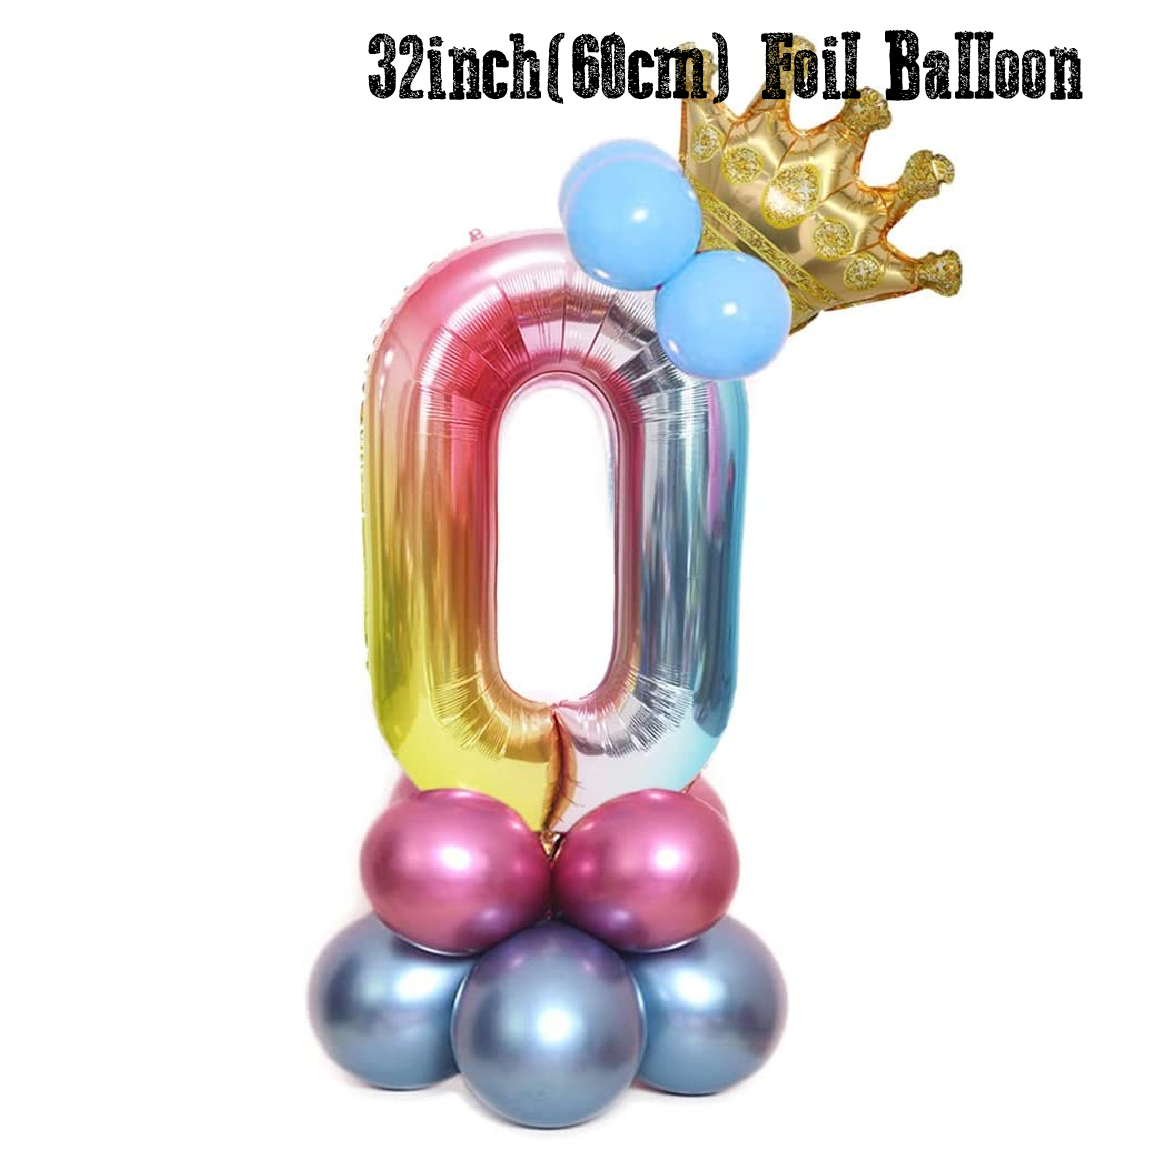 Party Decoration Balloon - 32 Inch Rainbow #0